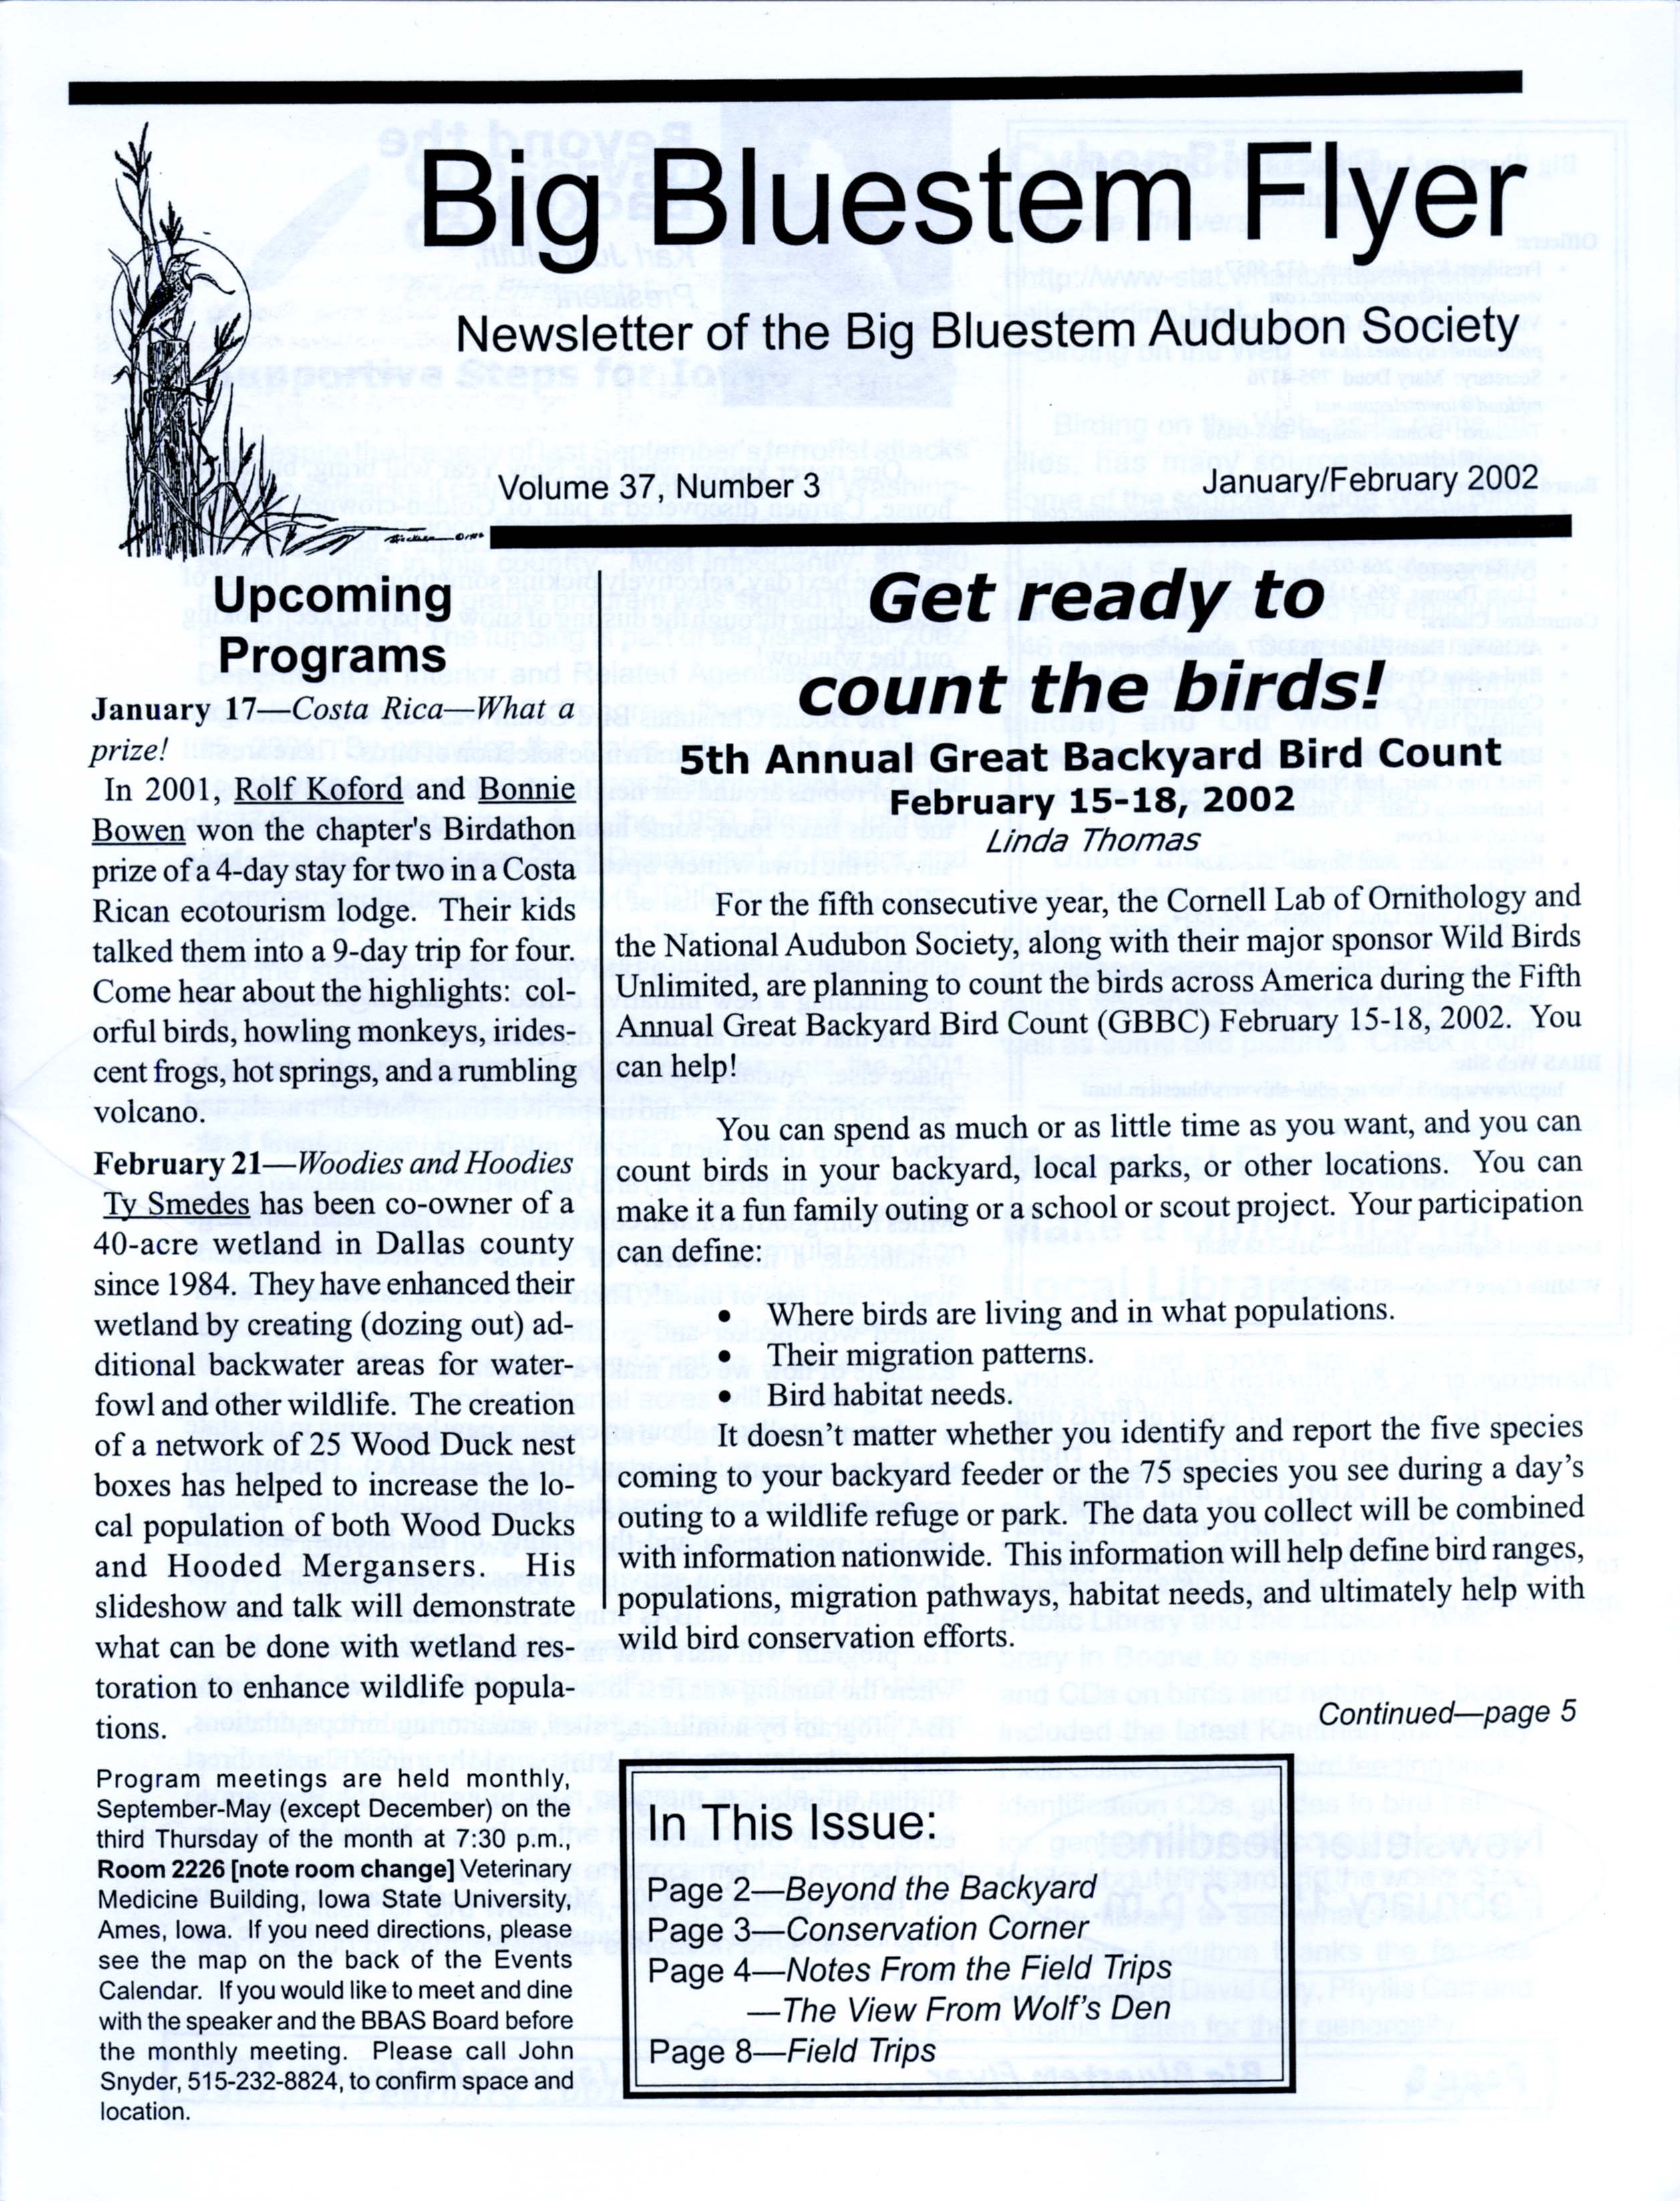 Big Bluestem Flyer, Volume 37, Number 3, January/February 2002